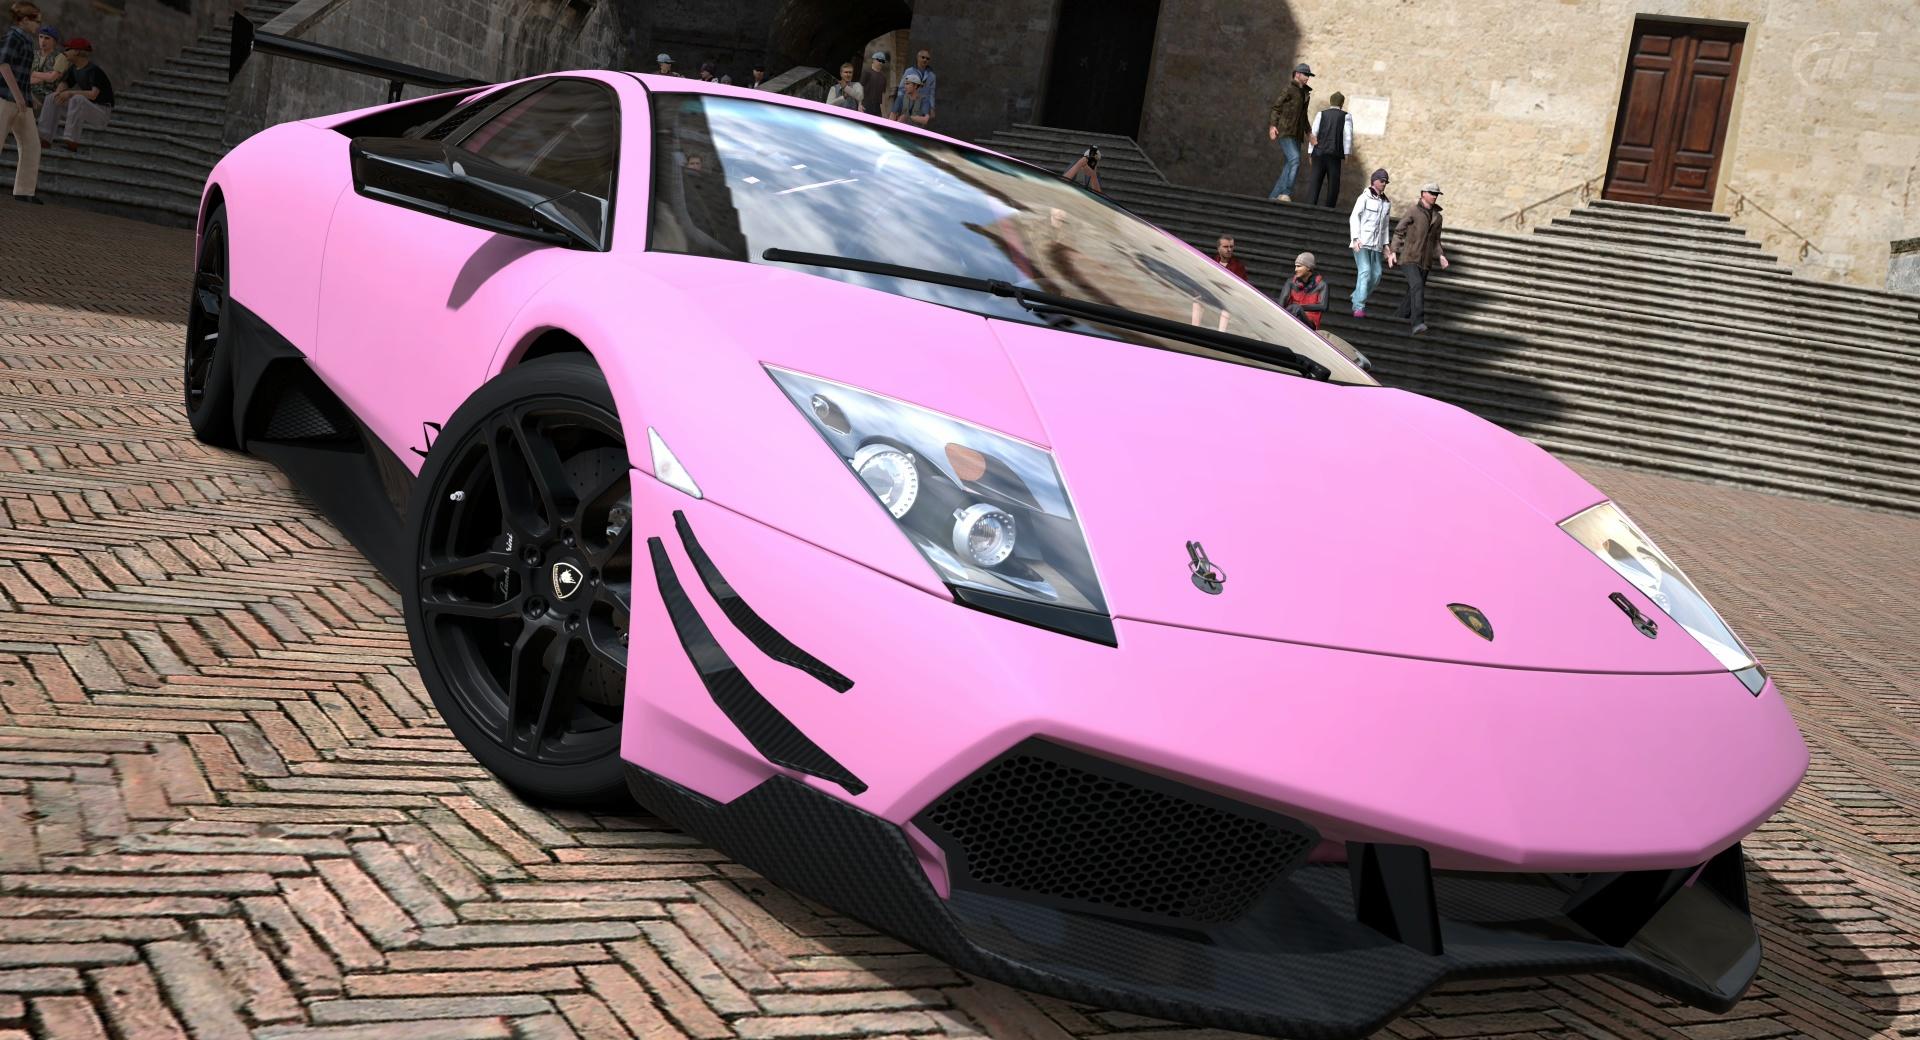 Lamborghini Murcielago LP670-4 SV Matte Pink at 320 x 480 iPhone size wallpapers HD quality